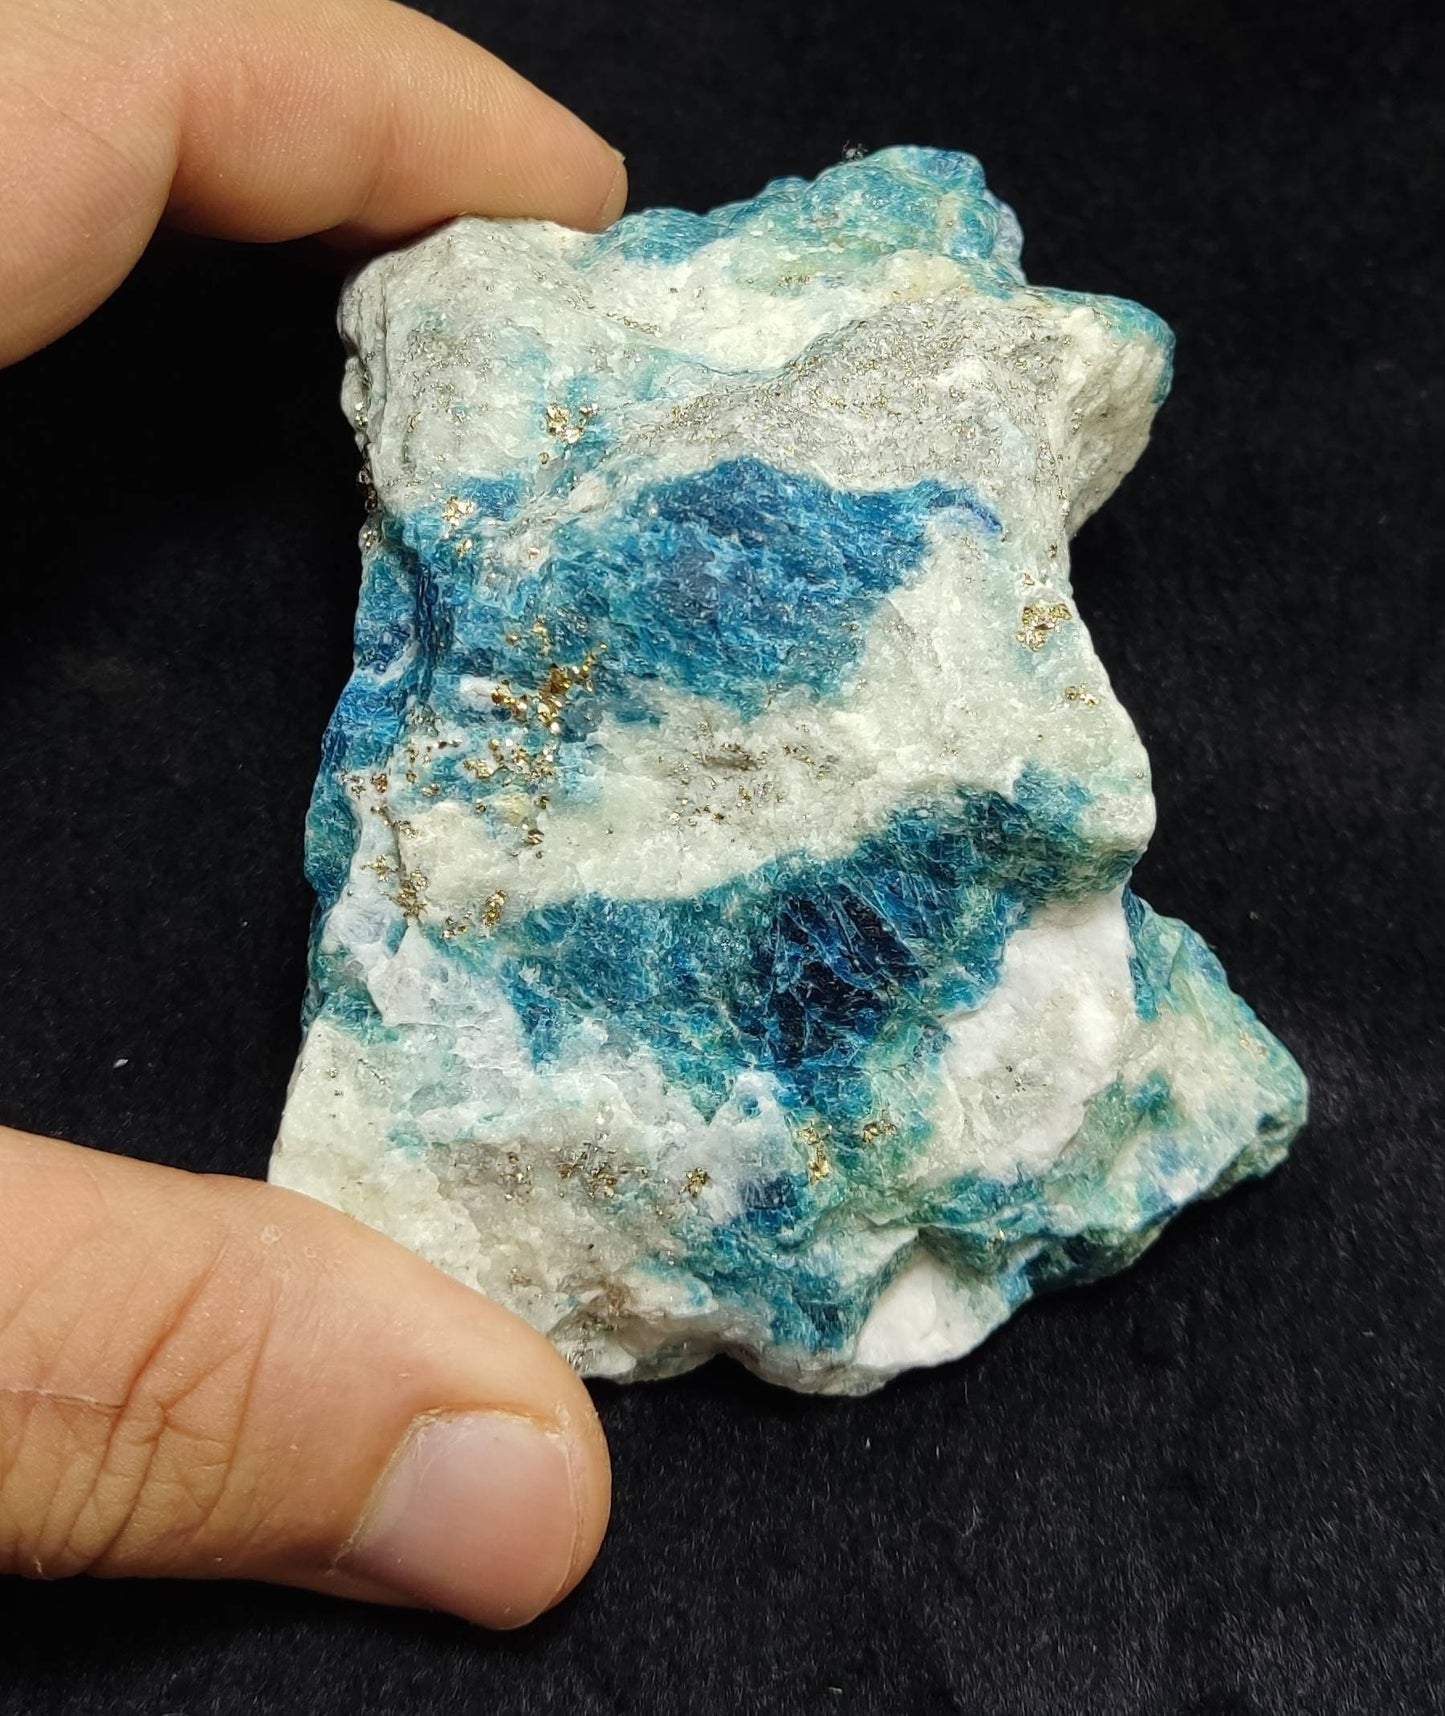 Amazing specimen of fluorescent Lazurite on matrix with pyrite 298 grams